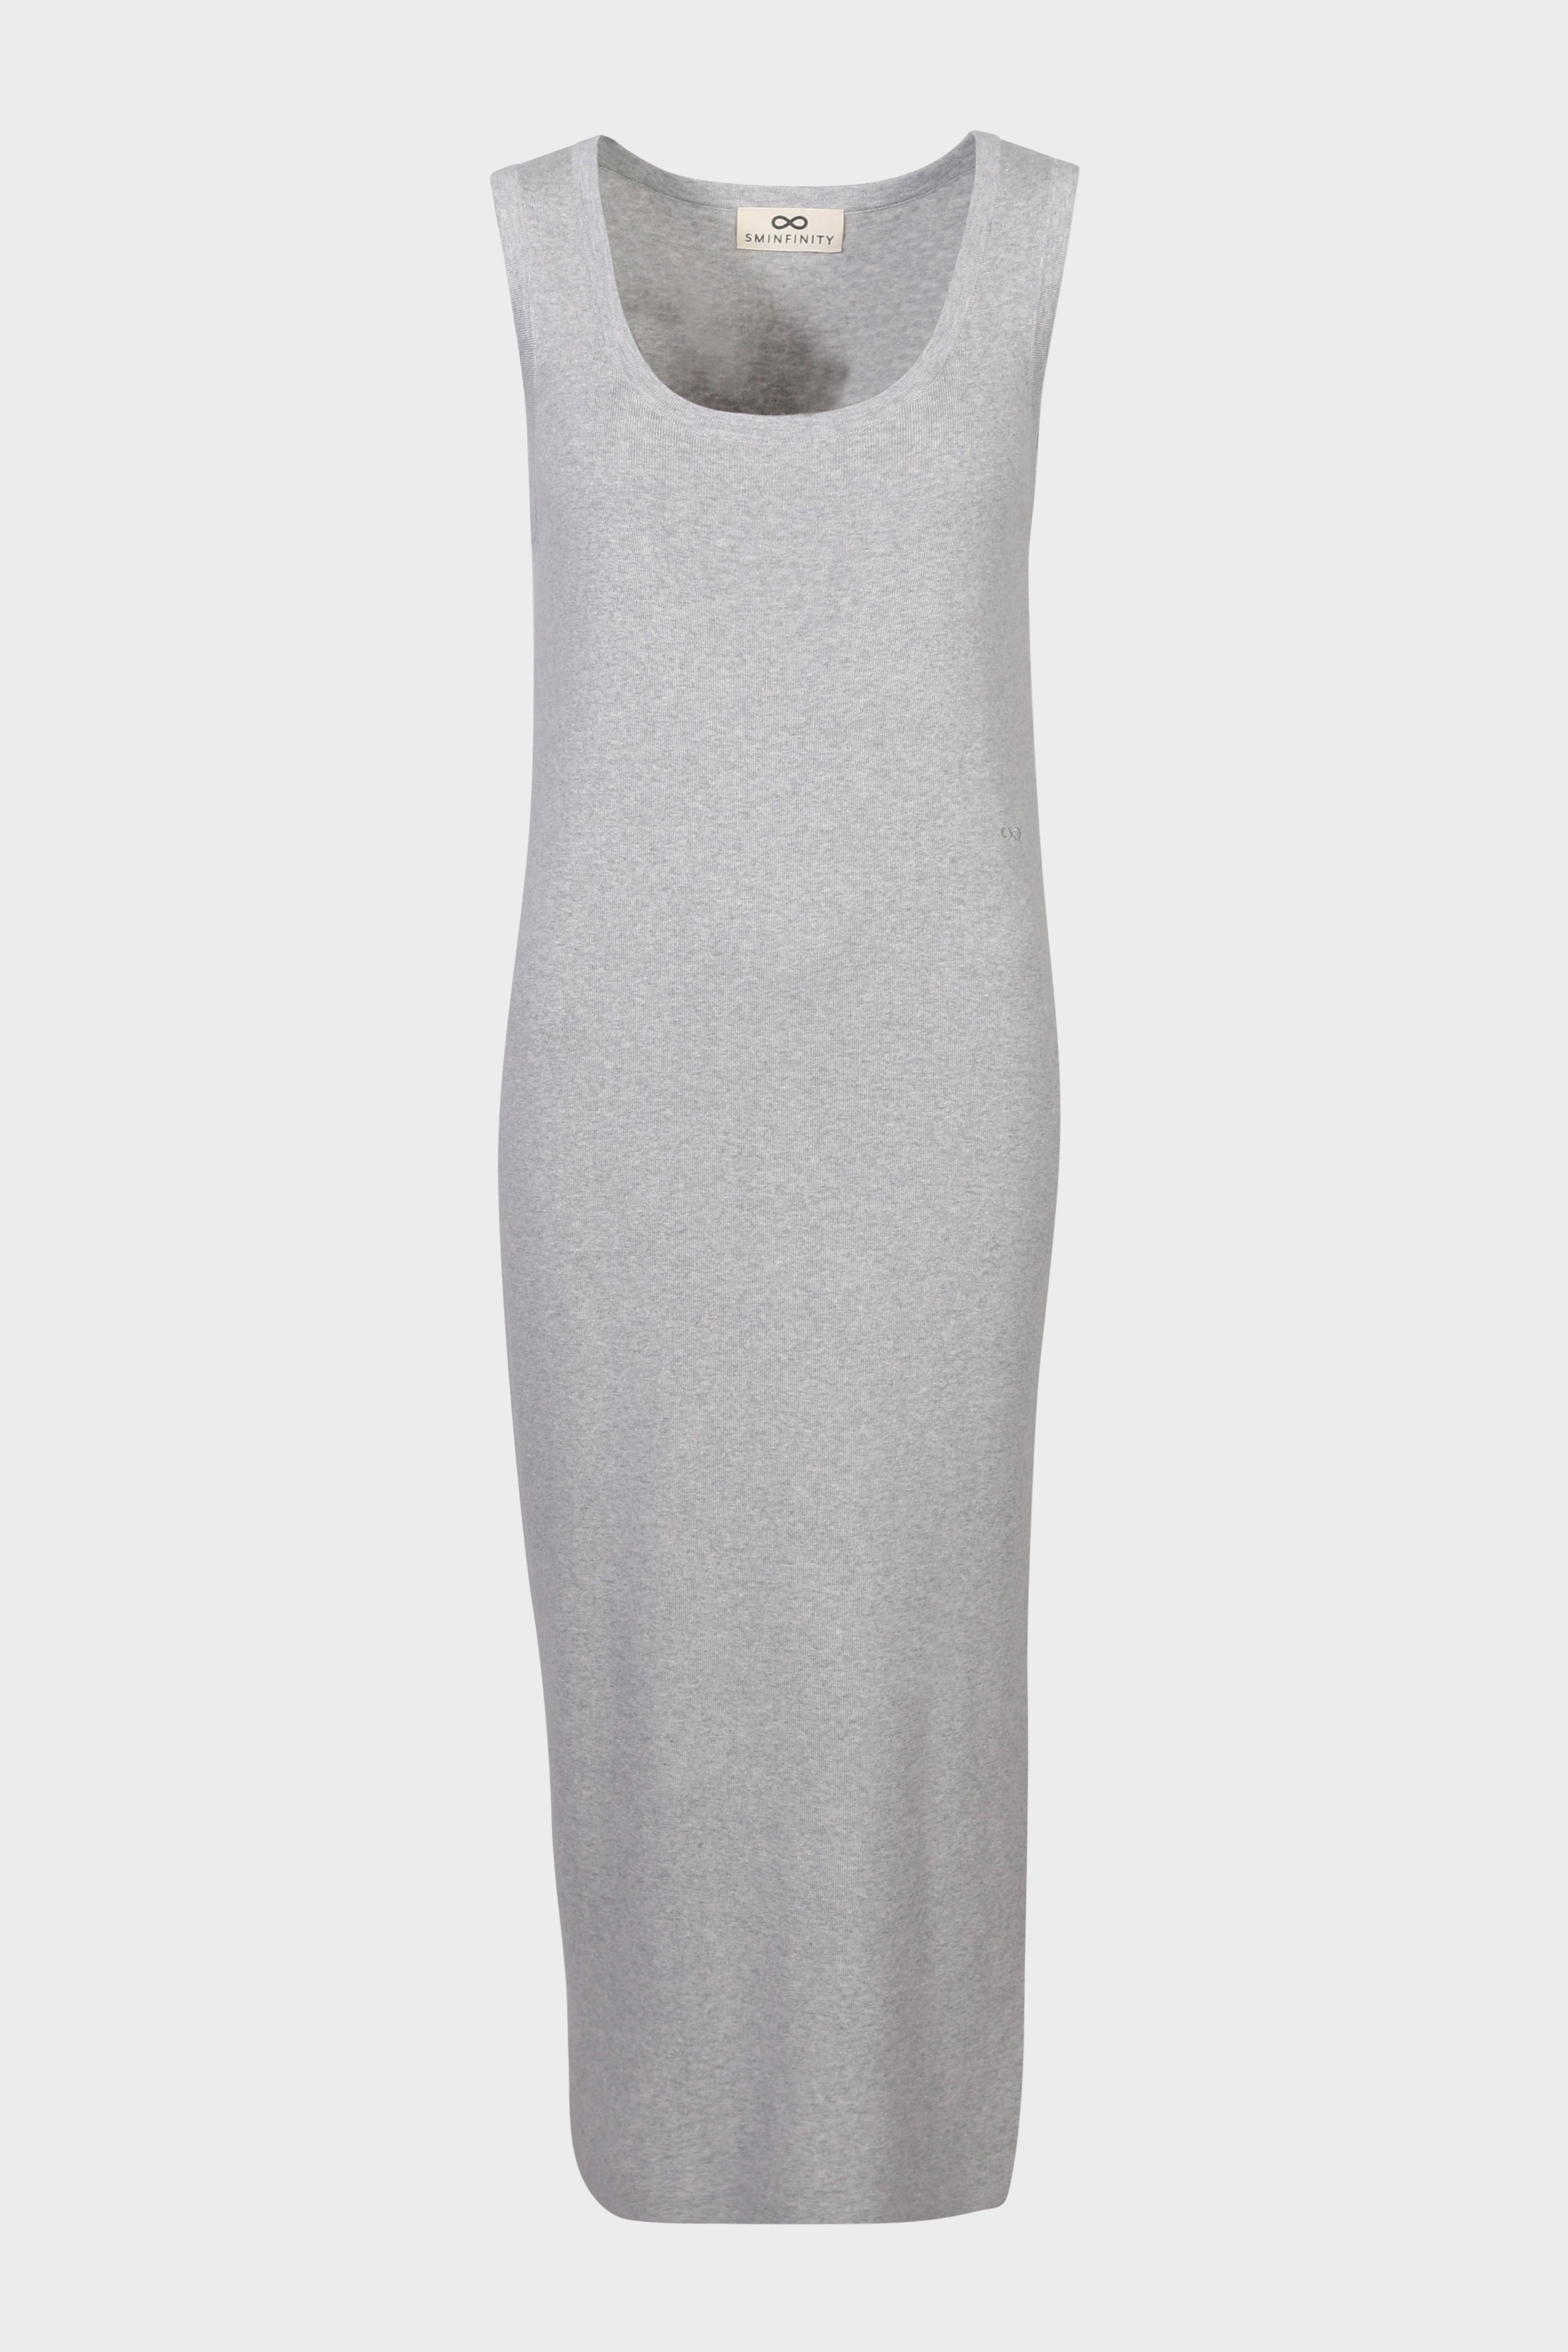 SMINFINITY Comfy Knit Maxi Tank Dress in Heather Grey